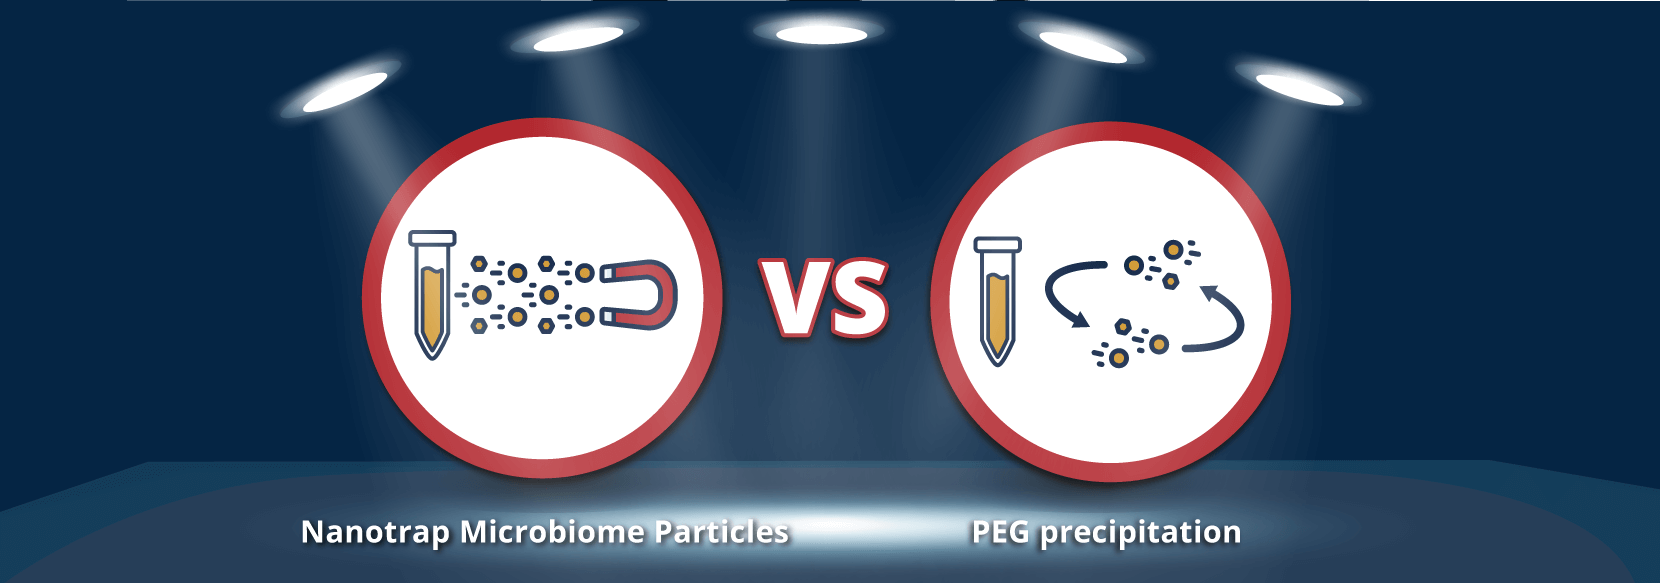 Nanotrap Microbiome Particles vs PEG Precipitation